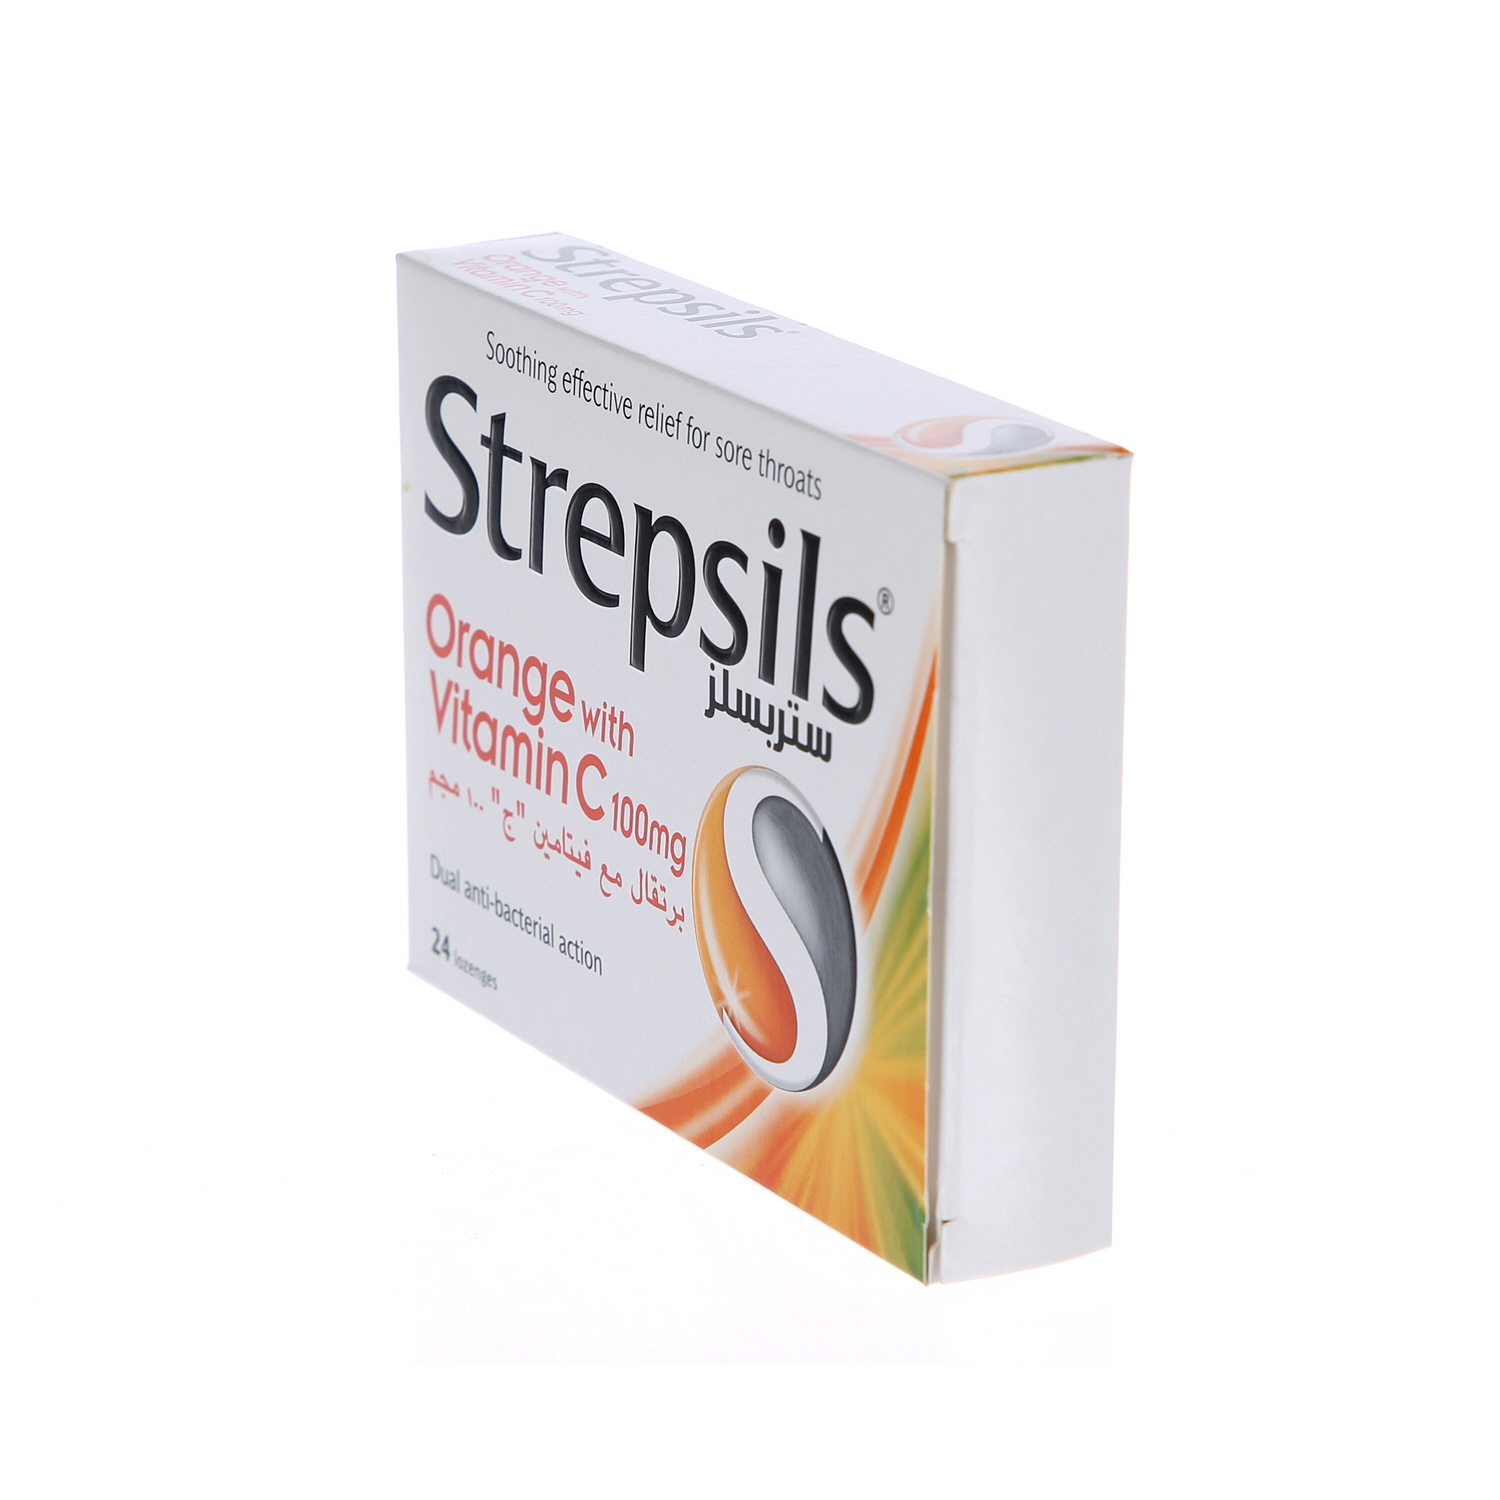 Strepsils Vitamin C 24'S